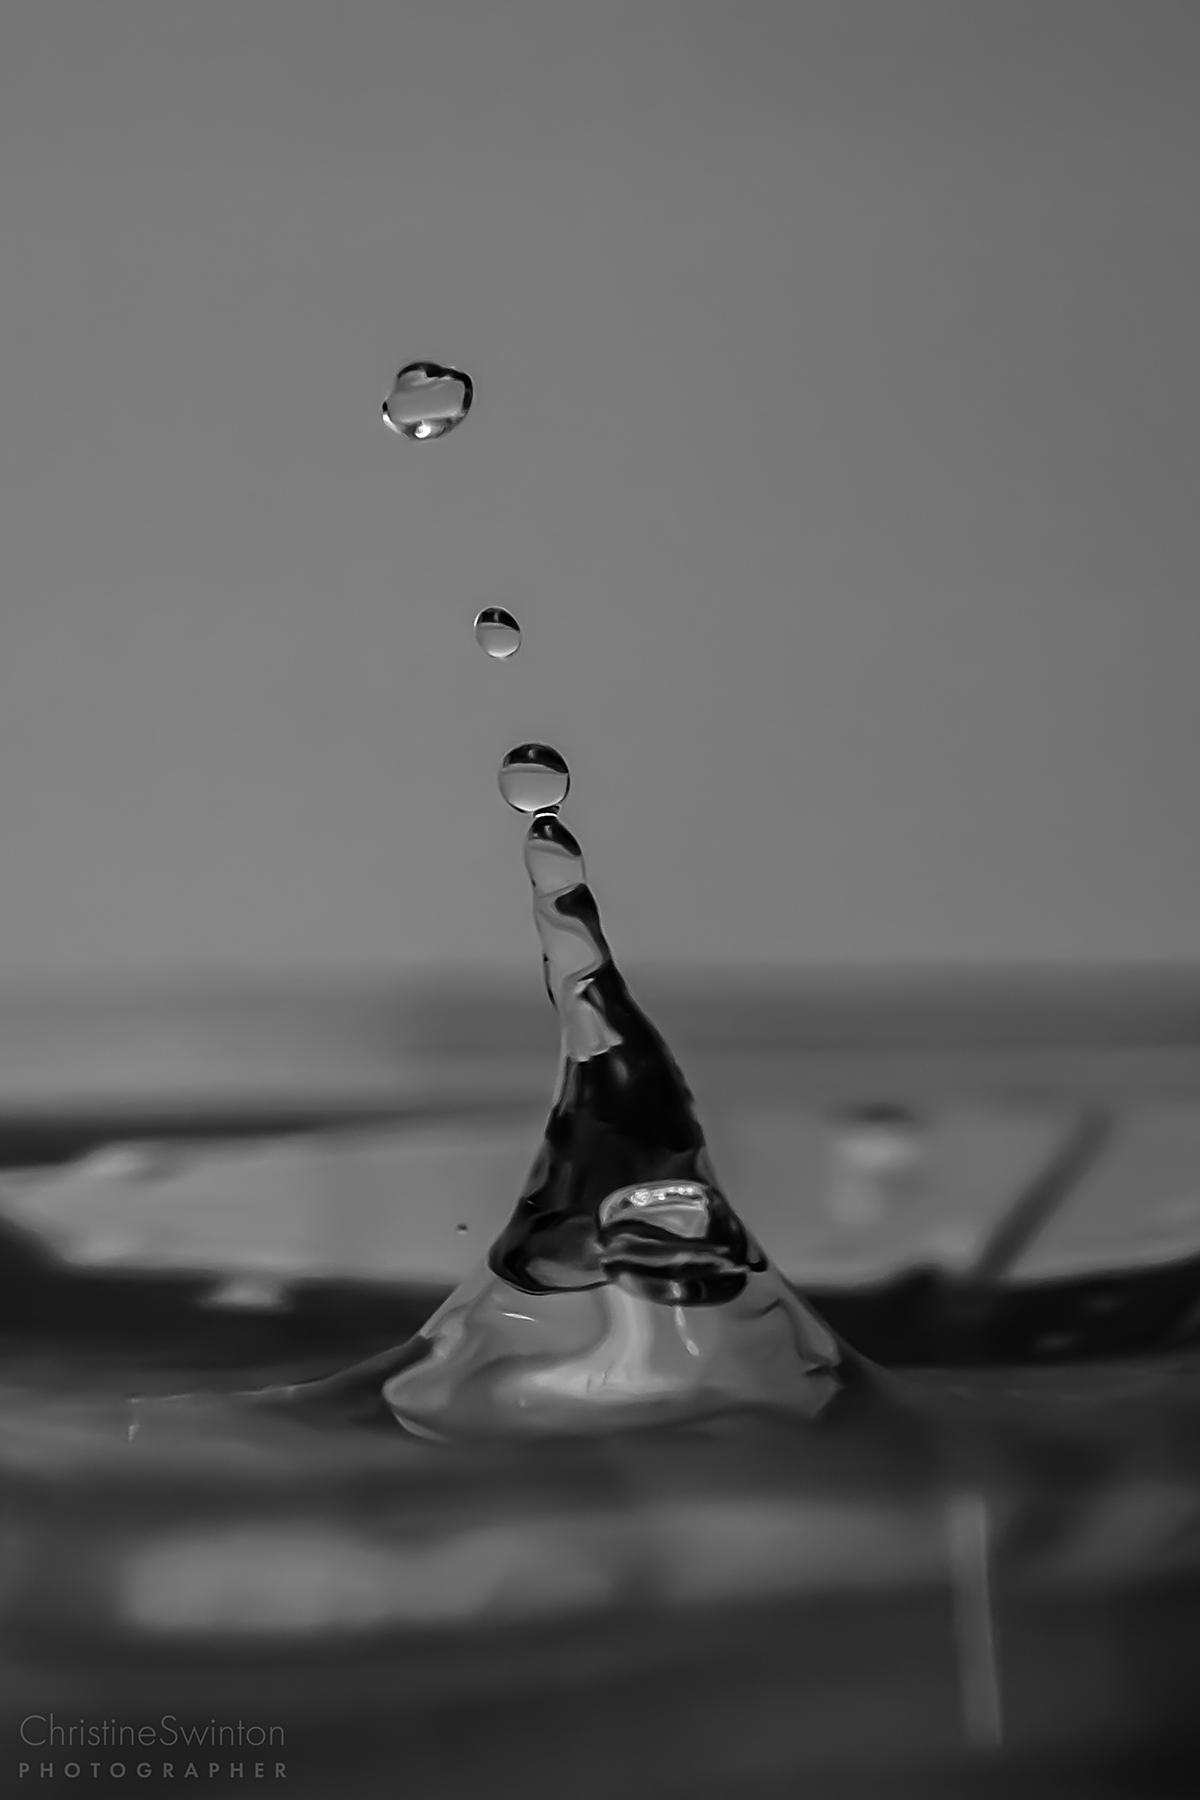 water drop drops Drop of water wonderful Beautiful